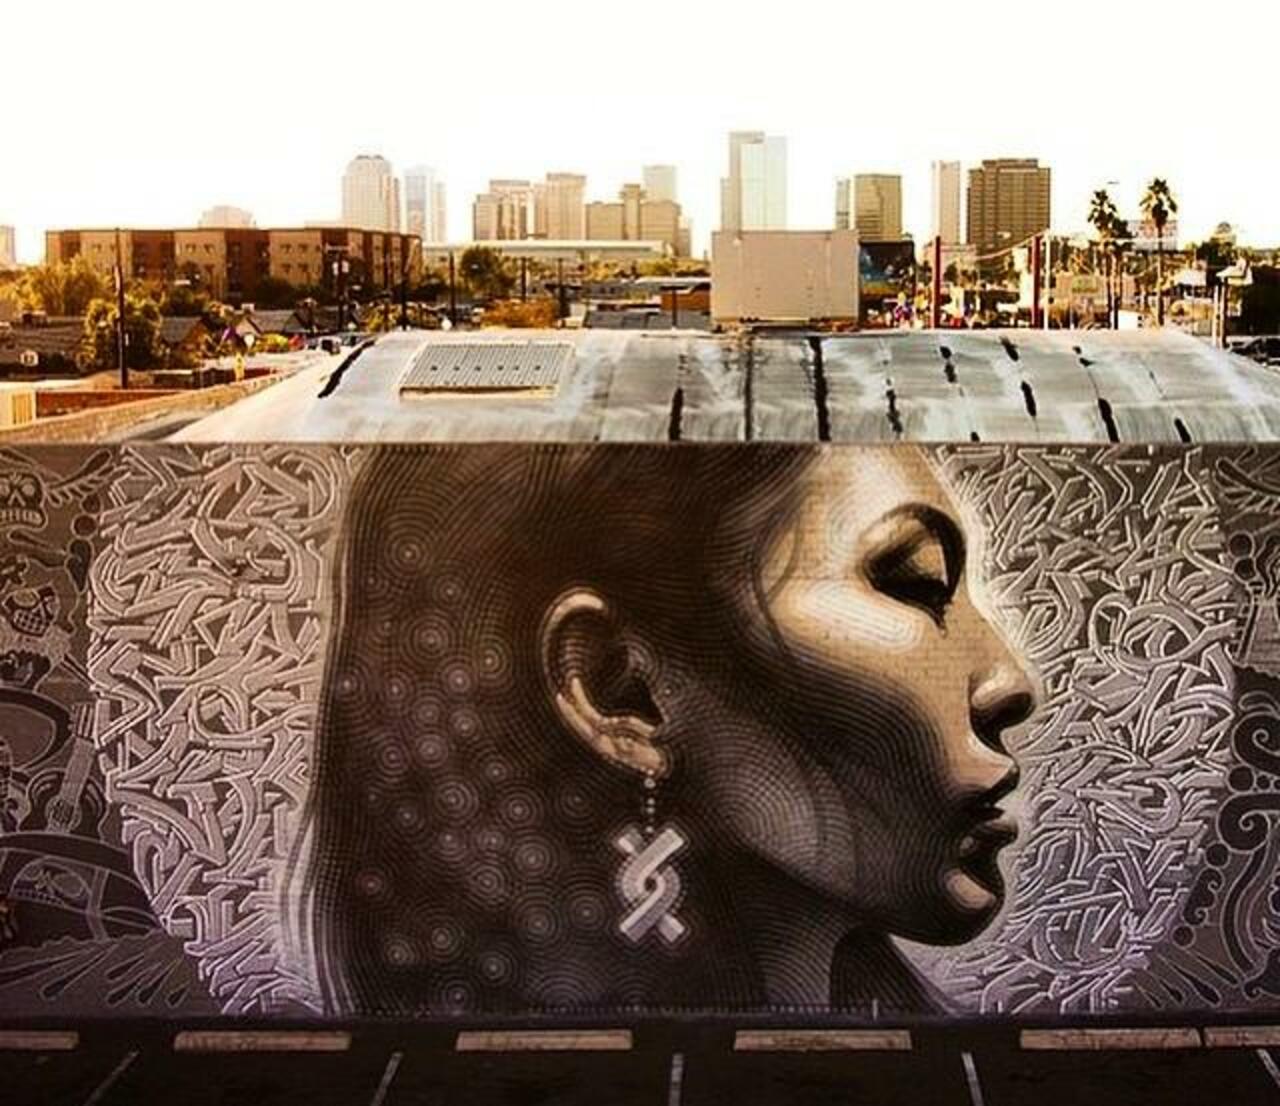 Latest Street Art work by El Mac in Phoenix, Arizona

#art #mural #graffiti #streetart http://t.co/nshviUY0i6